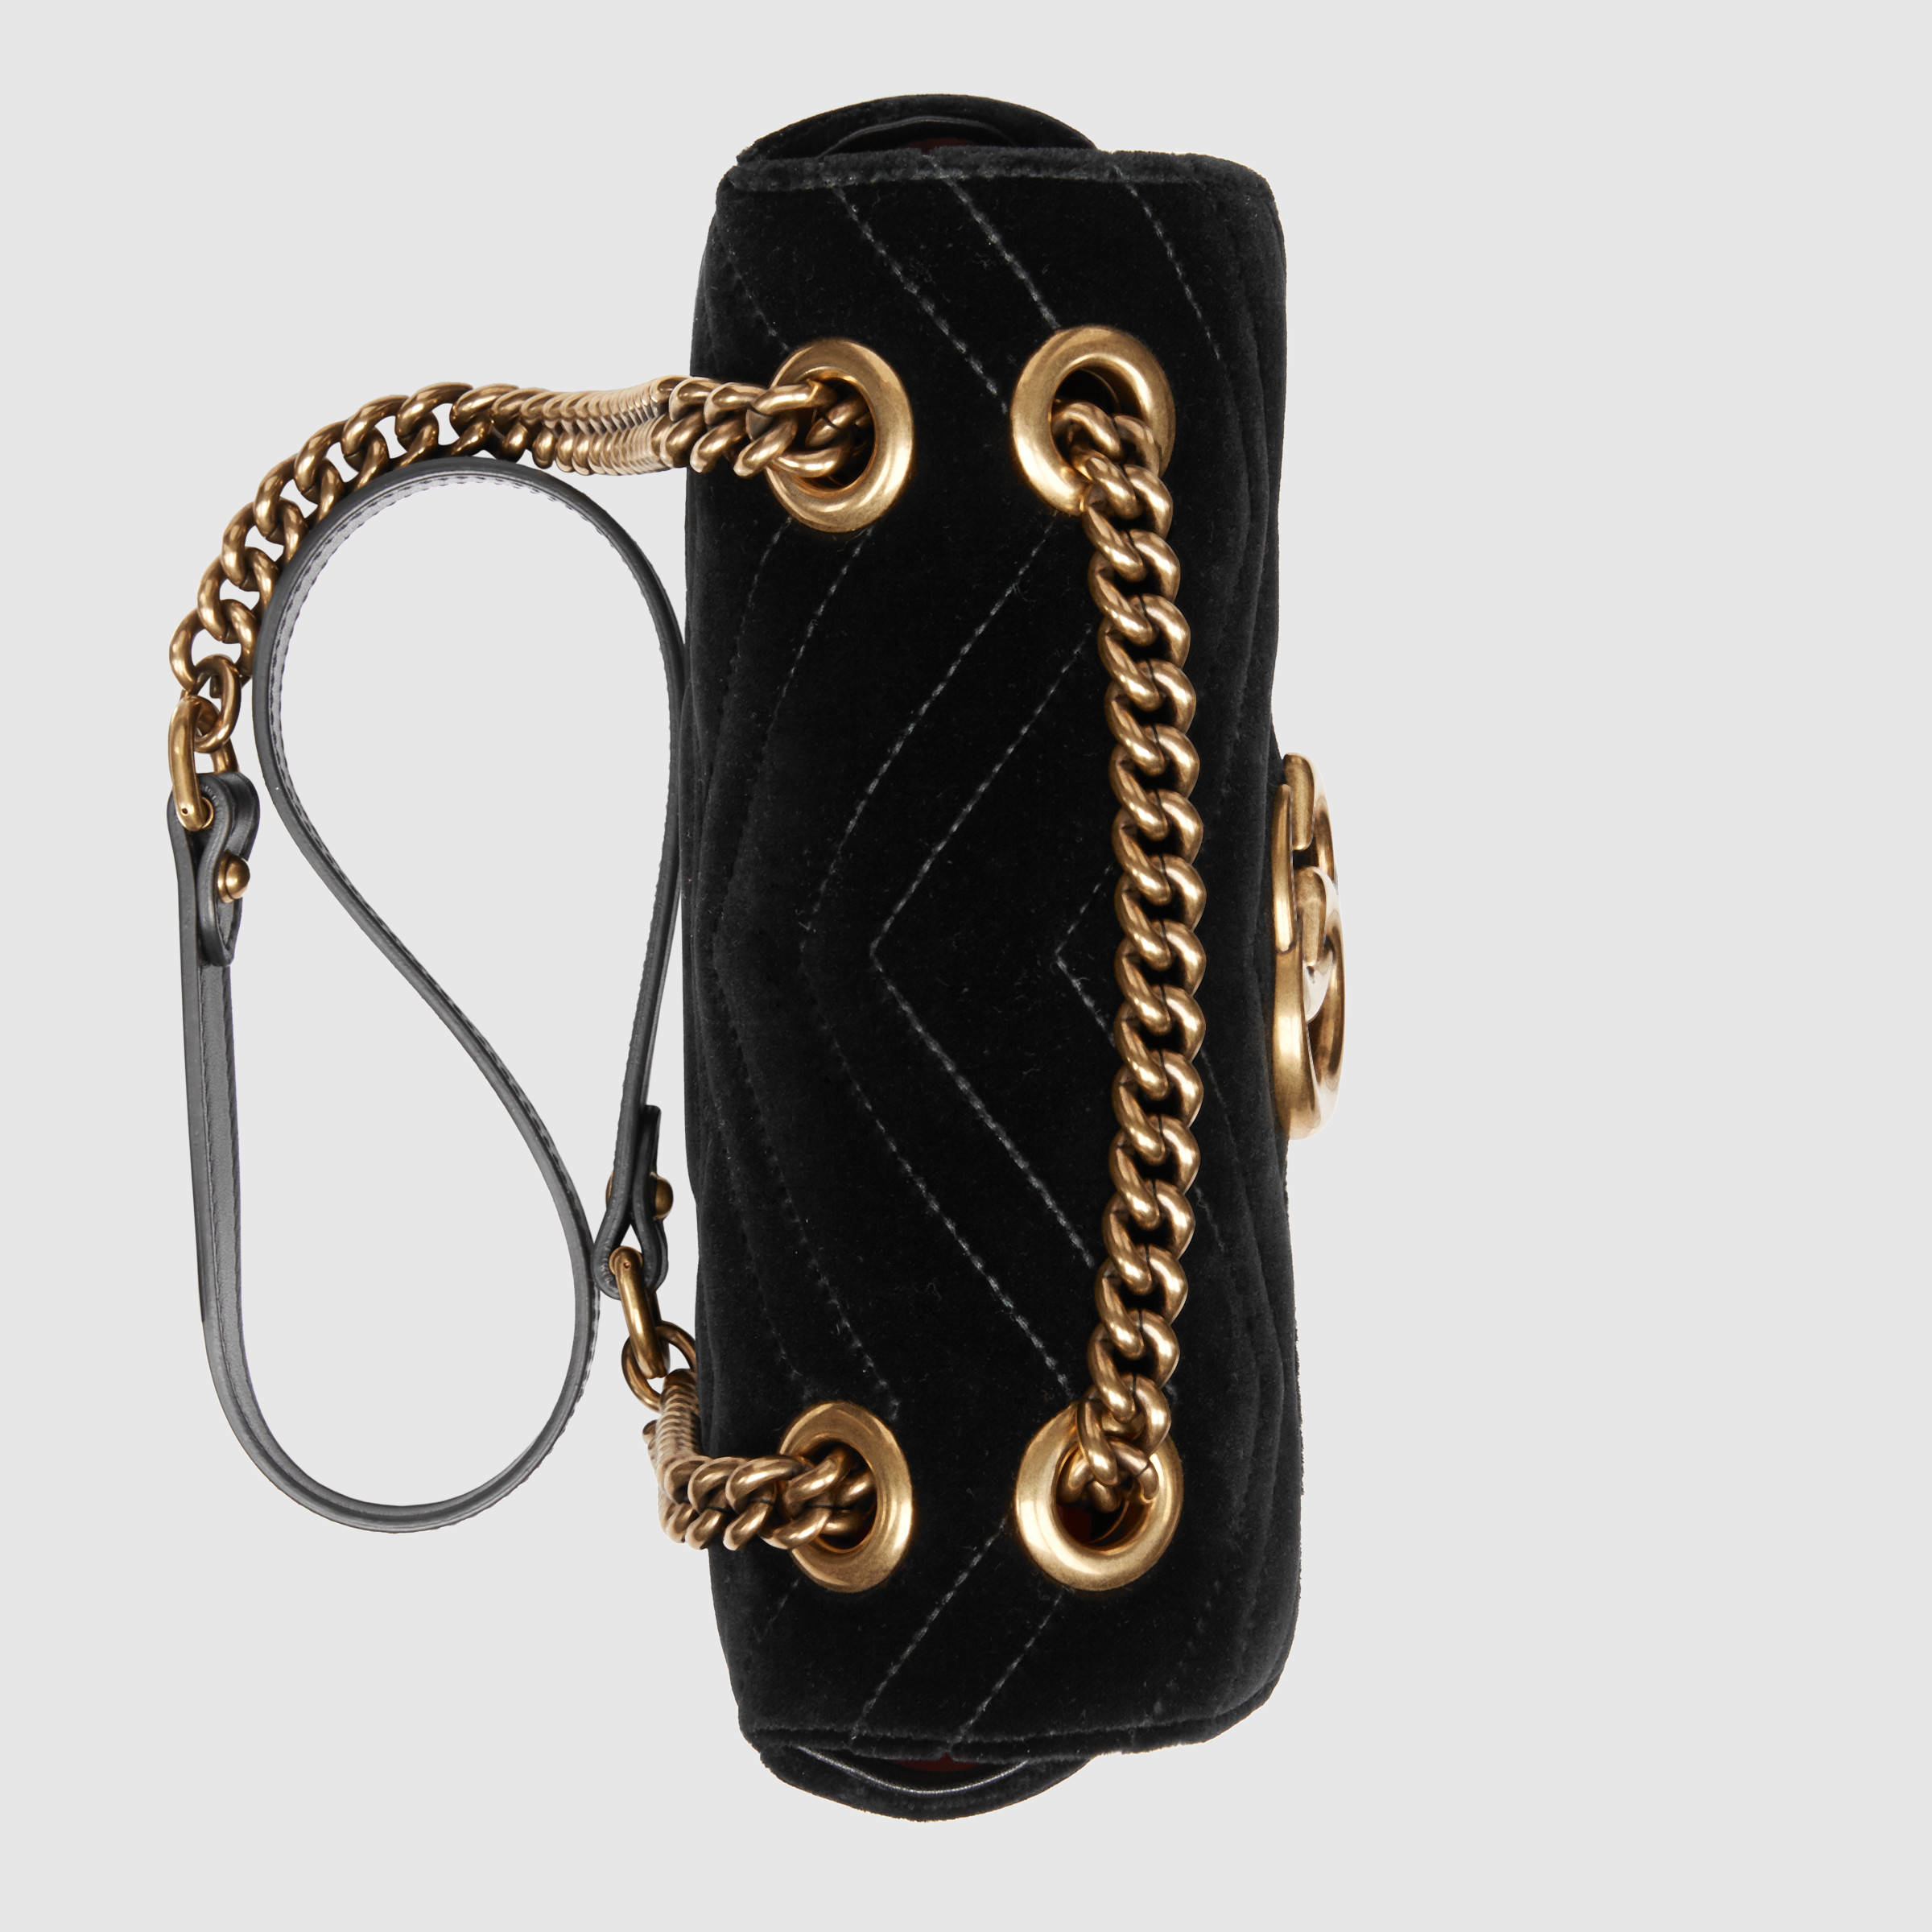 Lyst - Gucci GG Marmont Velvet Mini Shoulder Bag in Black